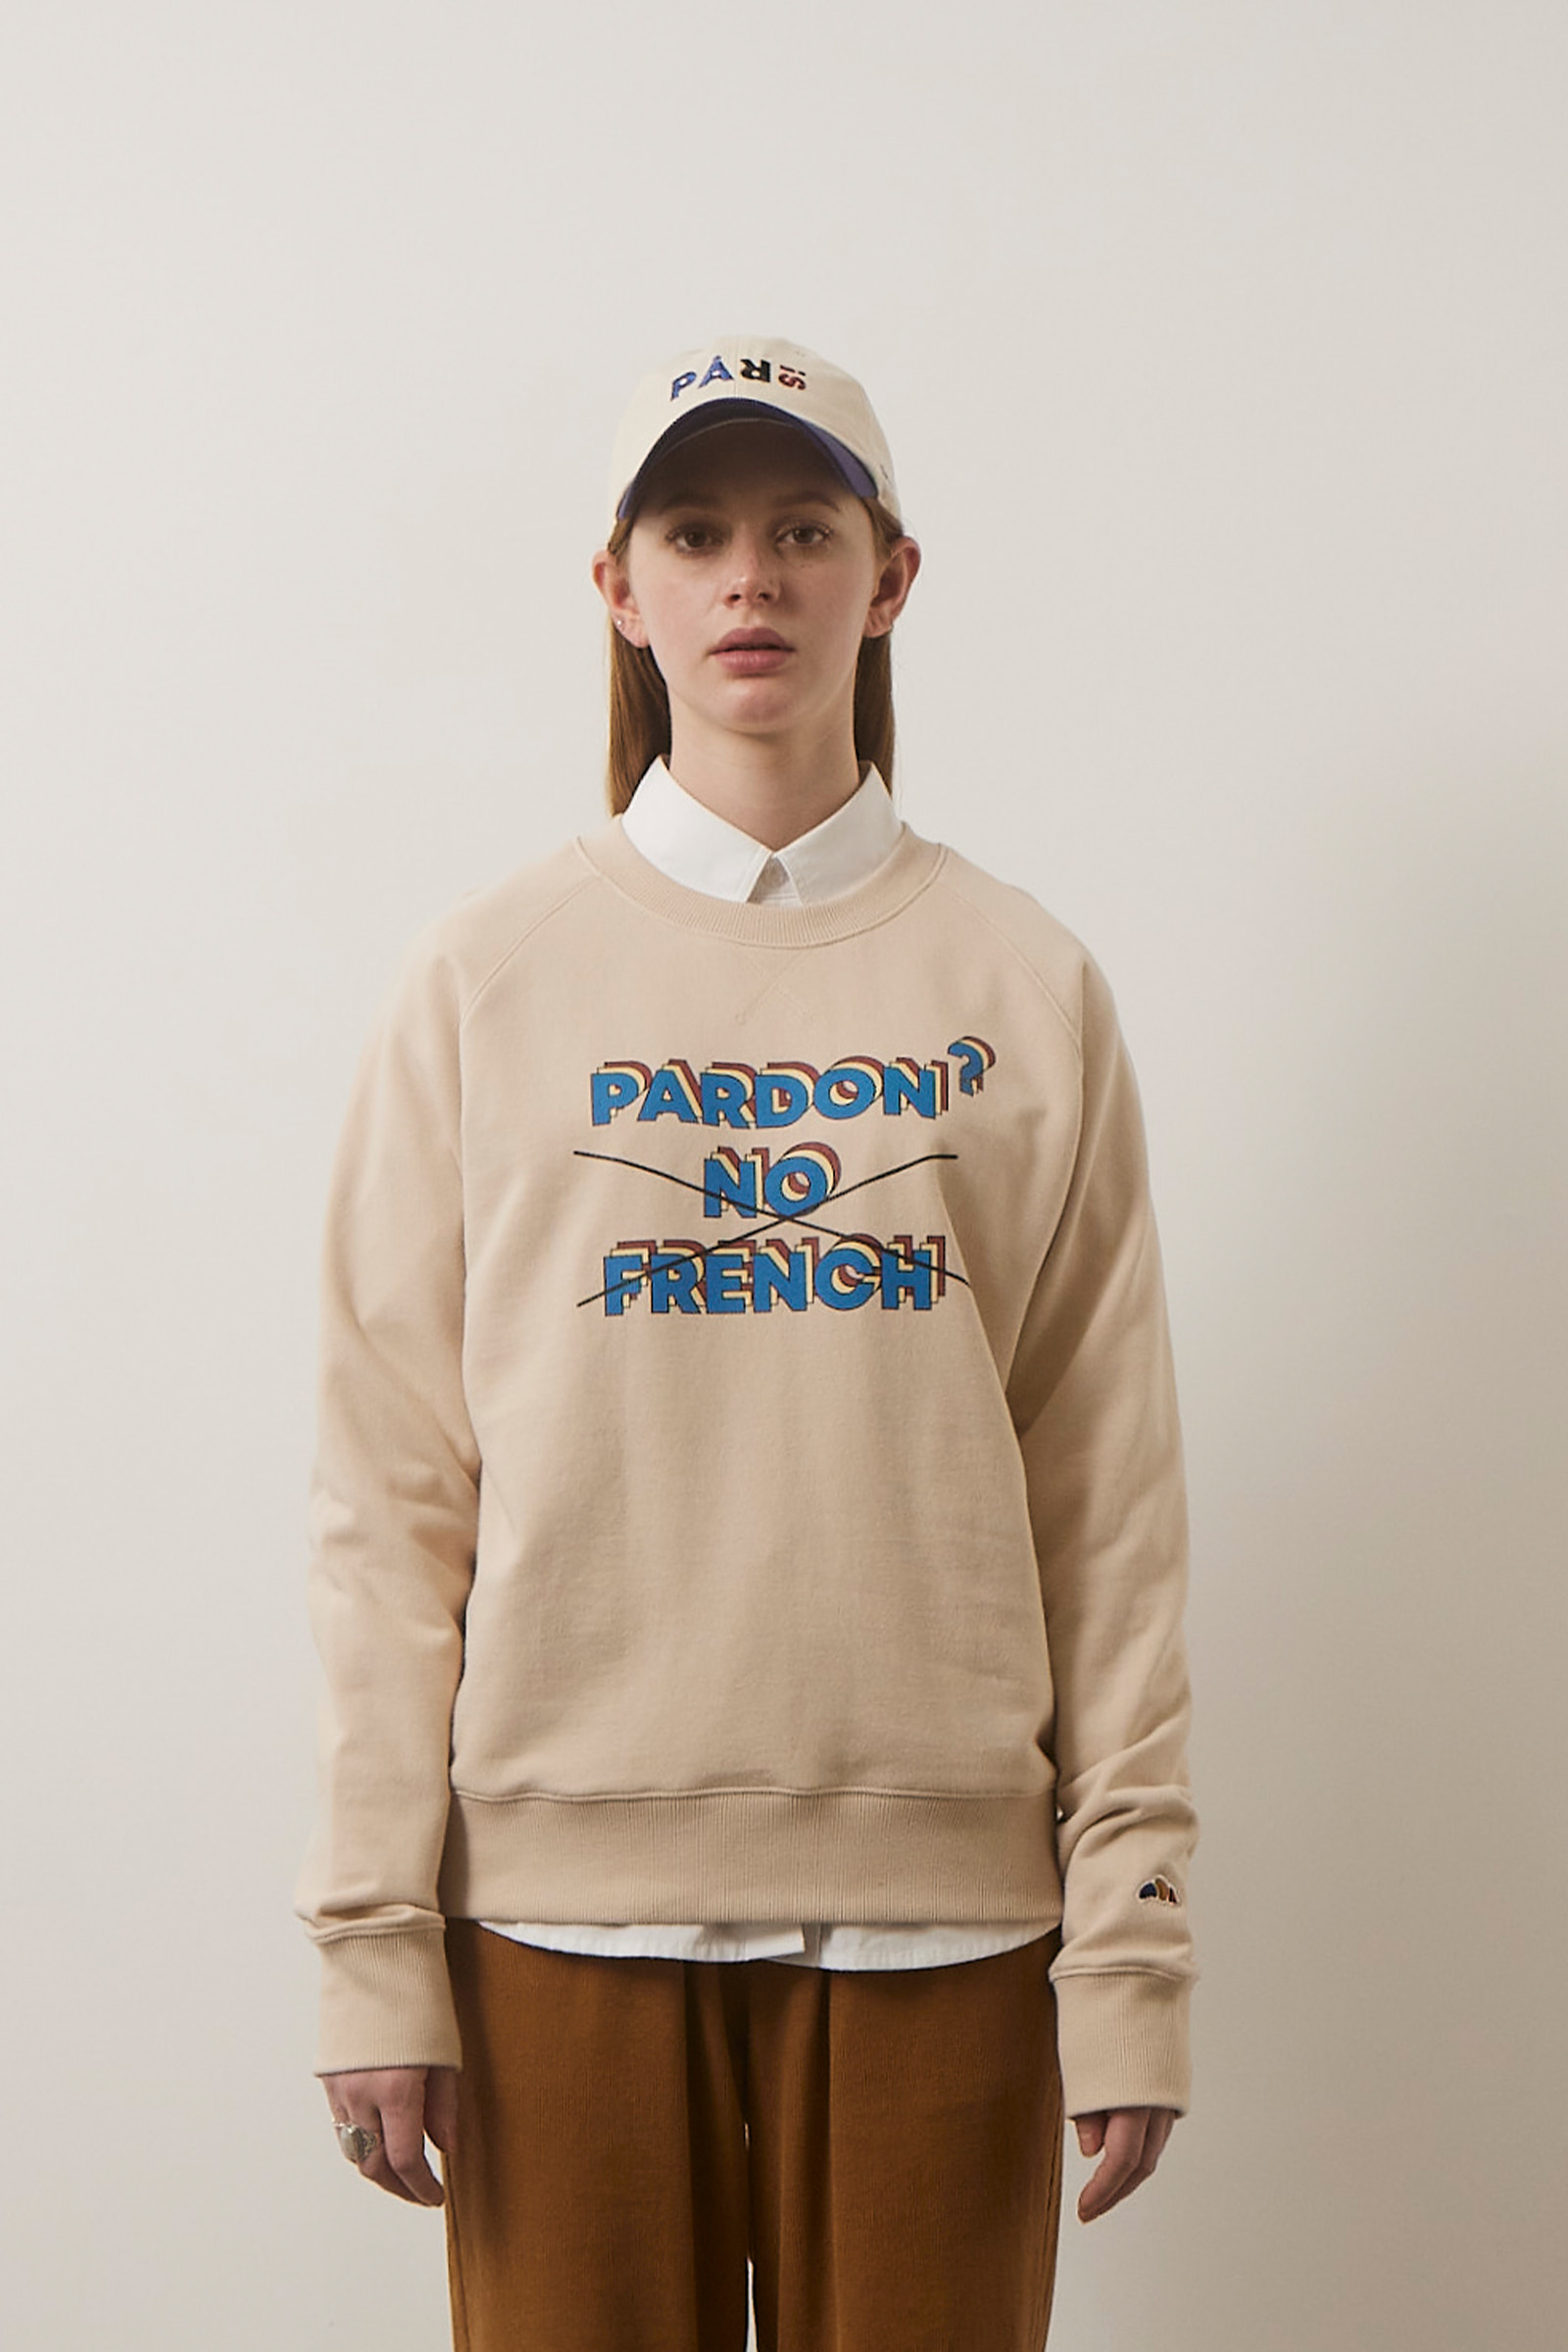 ep.5 Pardon? Sweatshirts (Blue/Ivory/Burgundy)